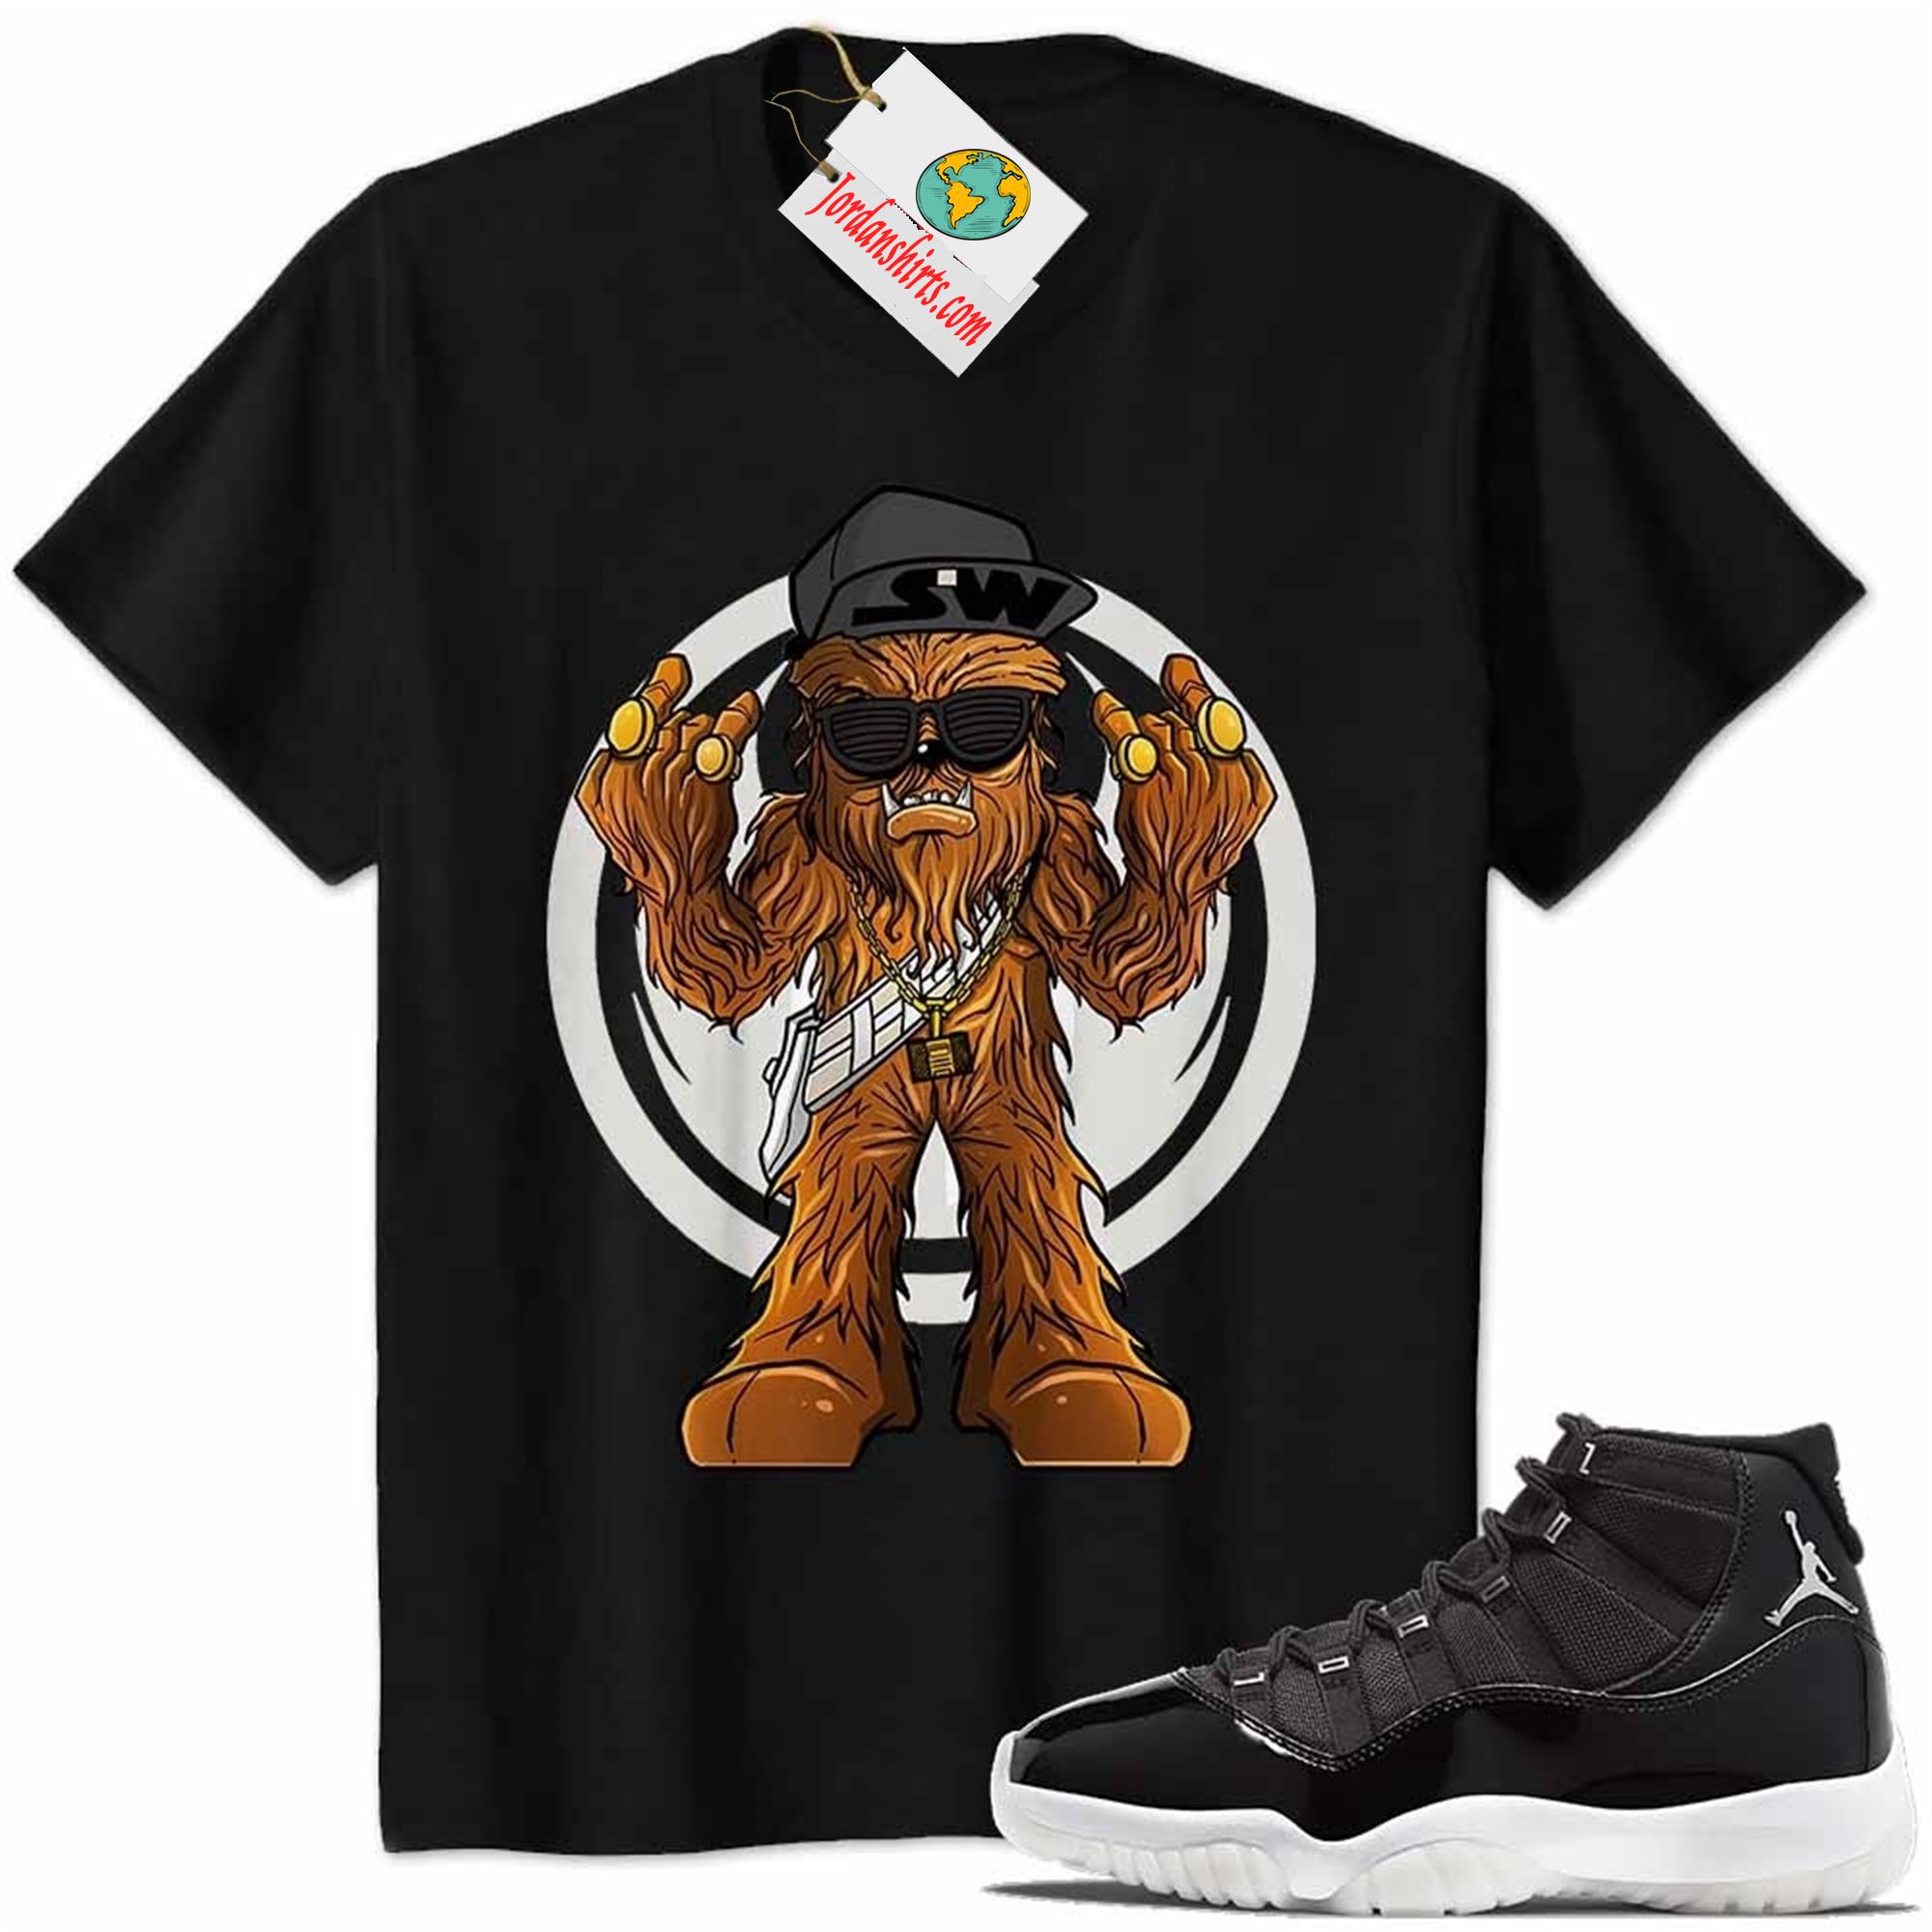 Jordan 11 Shirt, Gangster Chewbacca Stars War Black Air Jordan 11 Jubilee 11s Size Up To 5xl